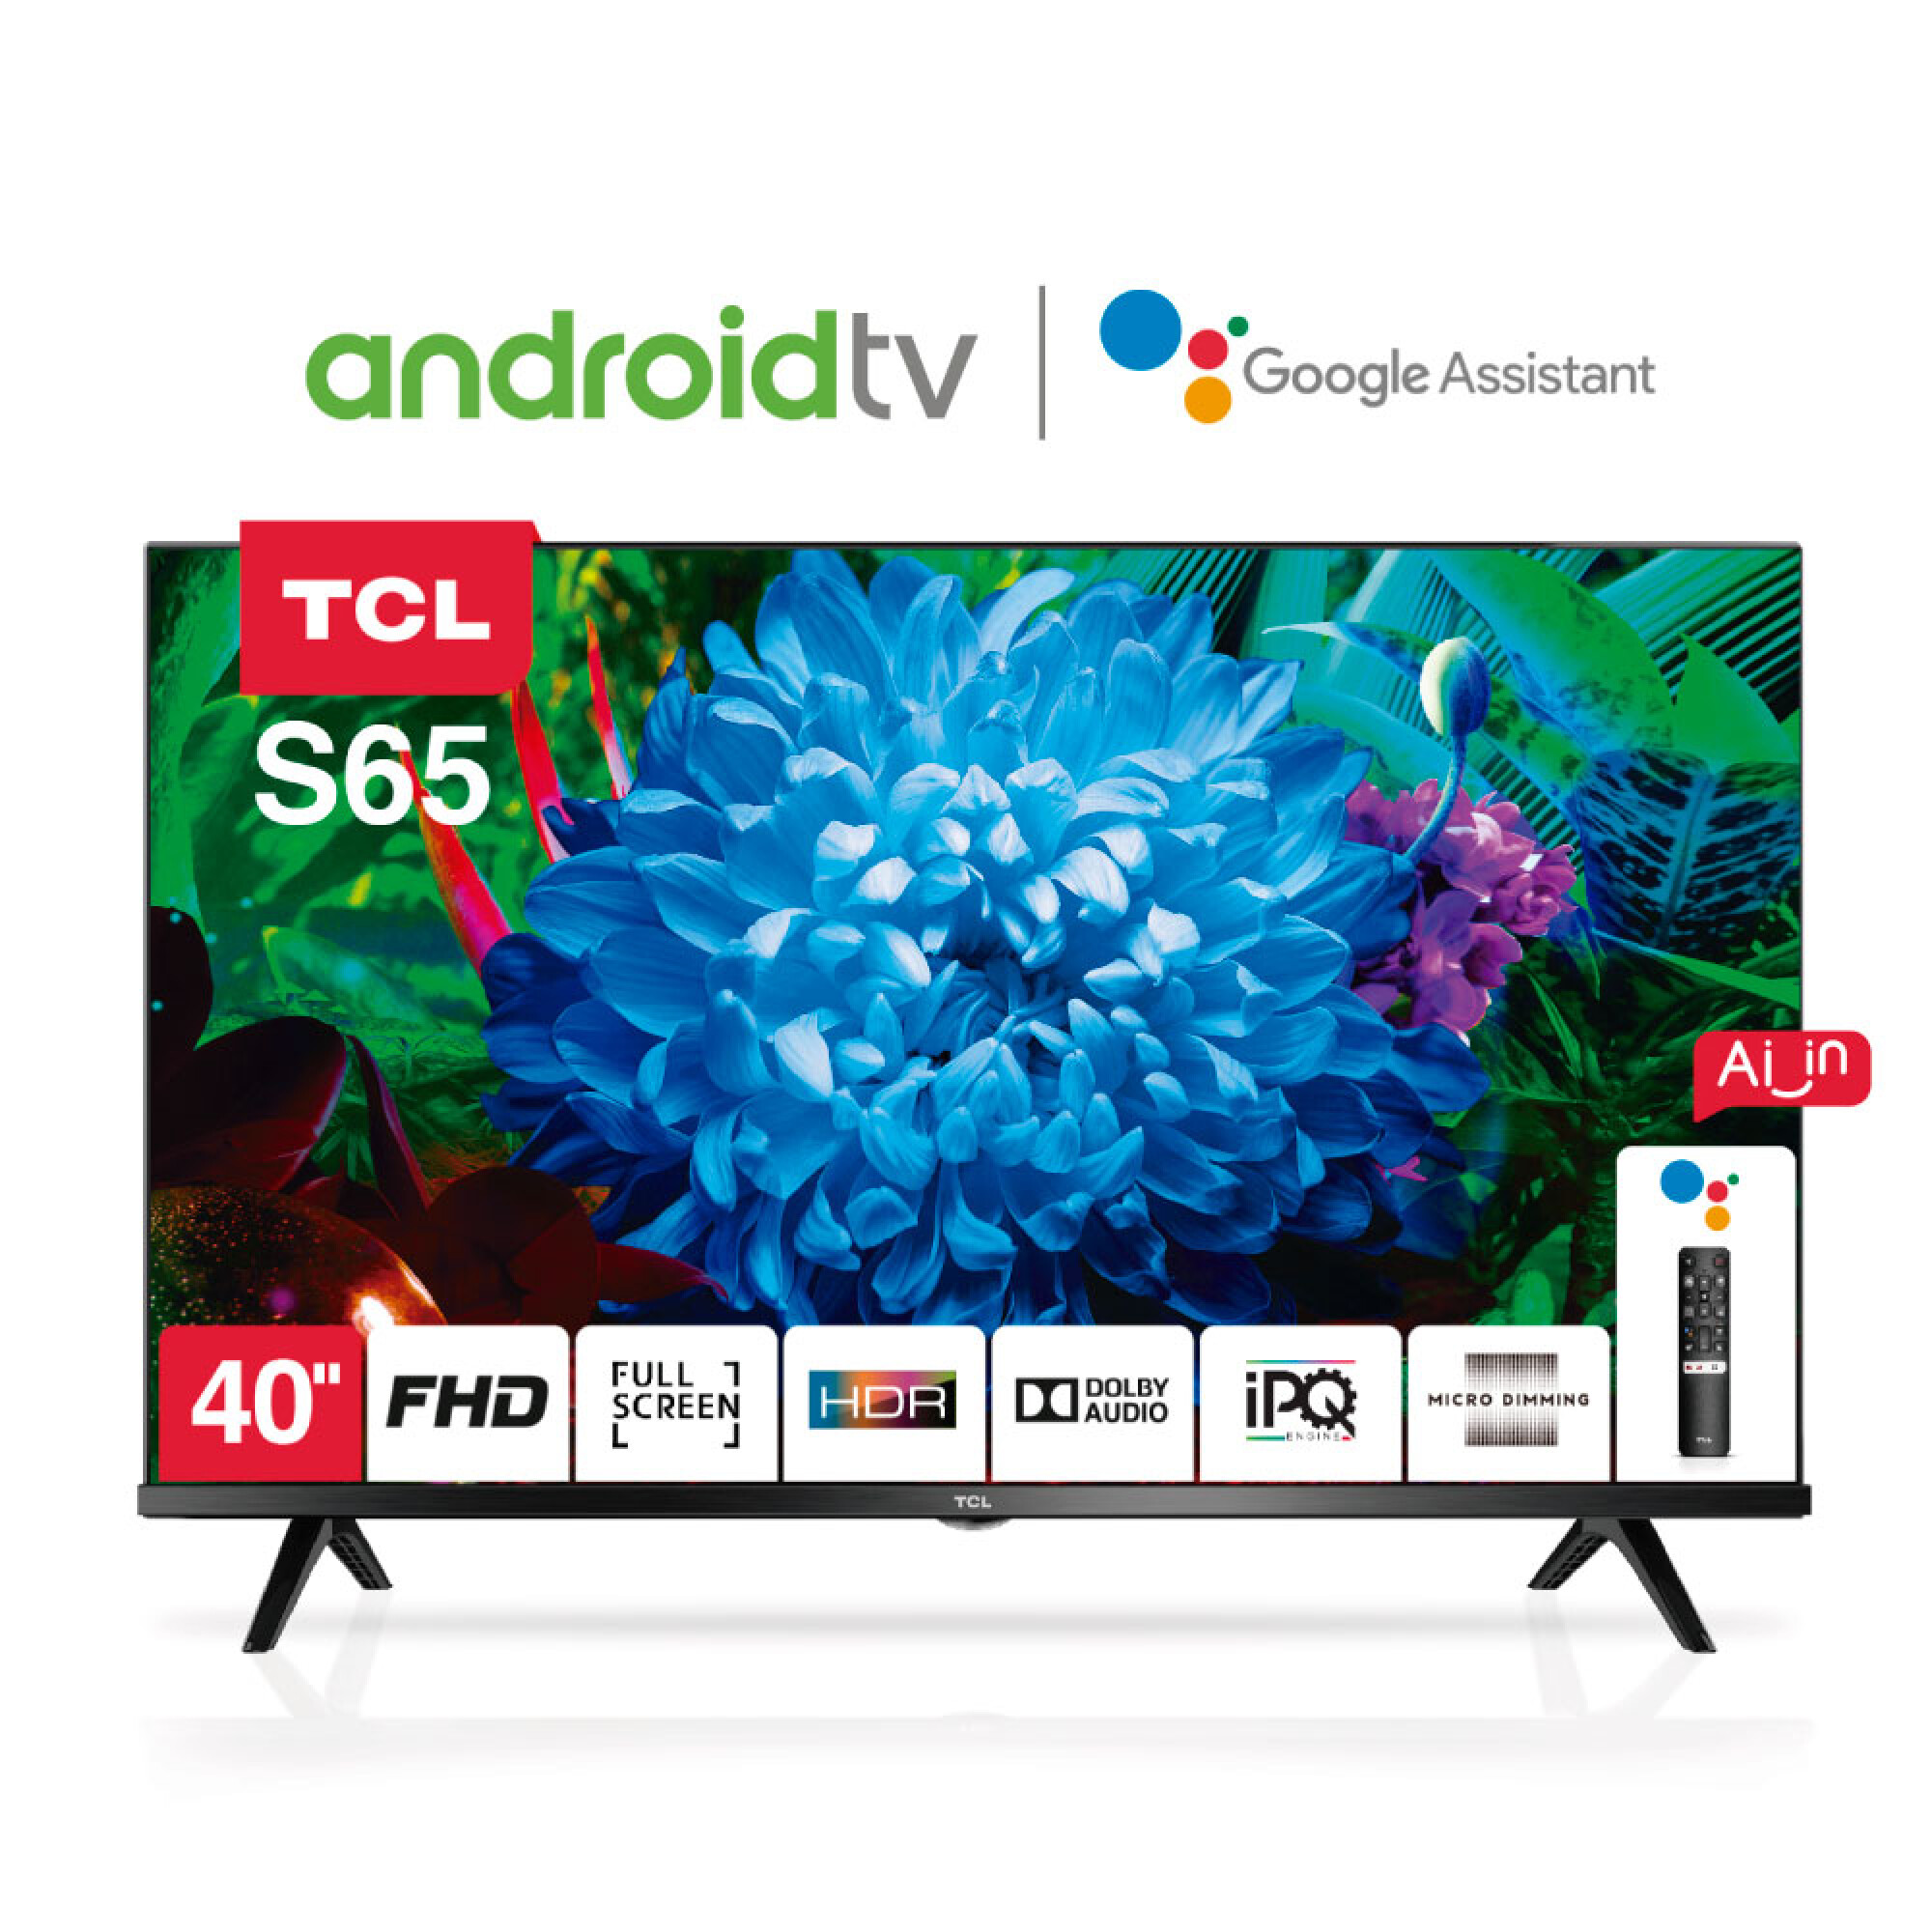 Pantalla TCL 40 Pulgadas LED Full HD Android TV